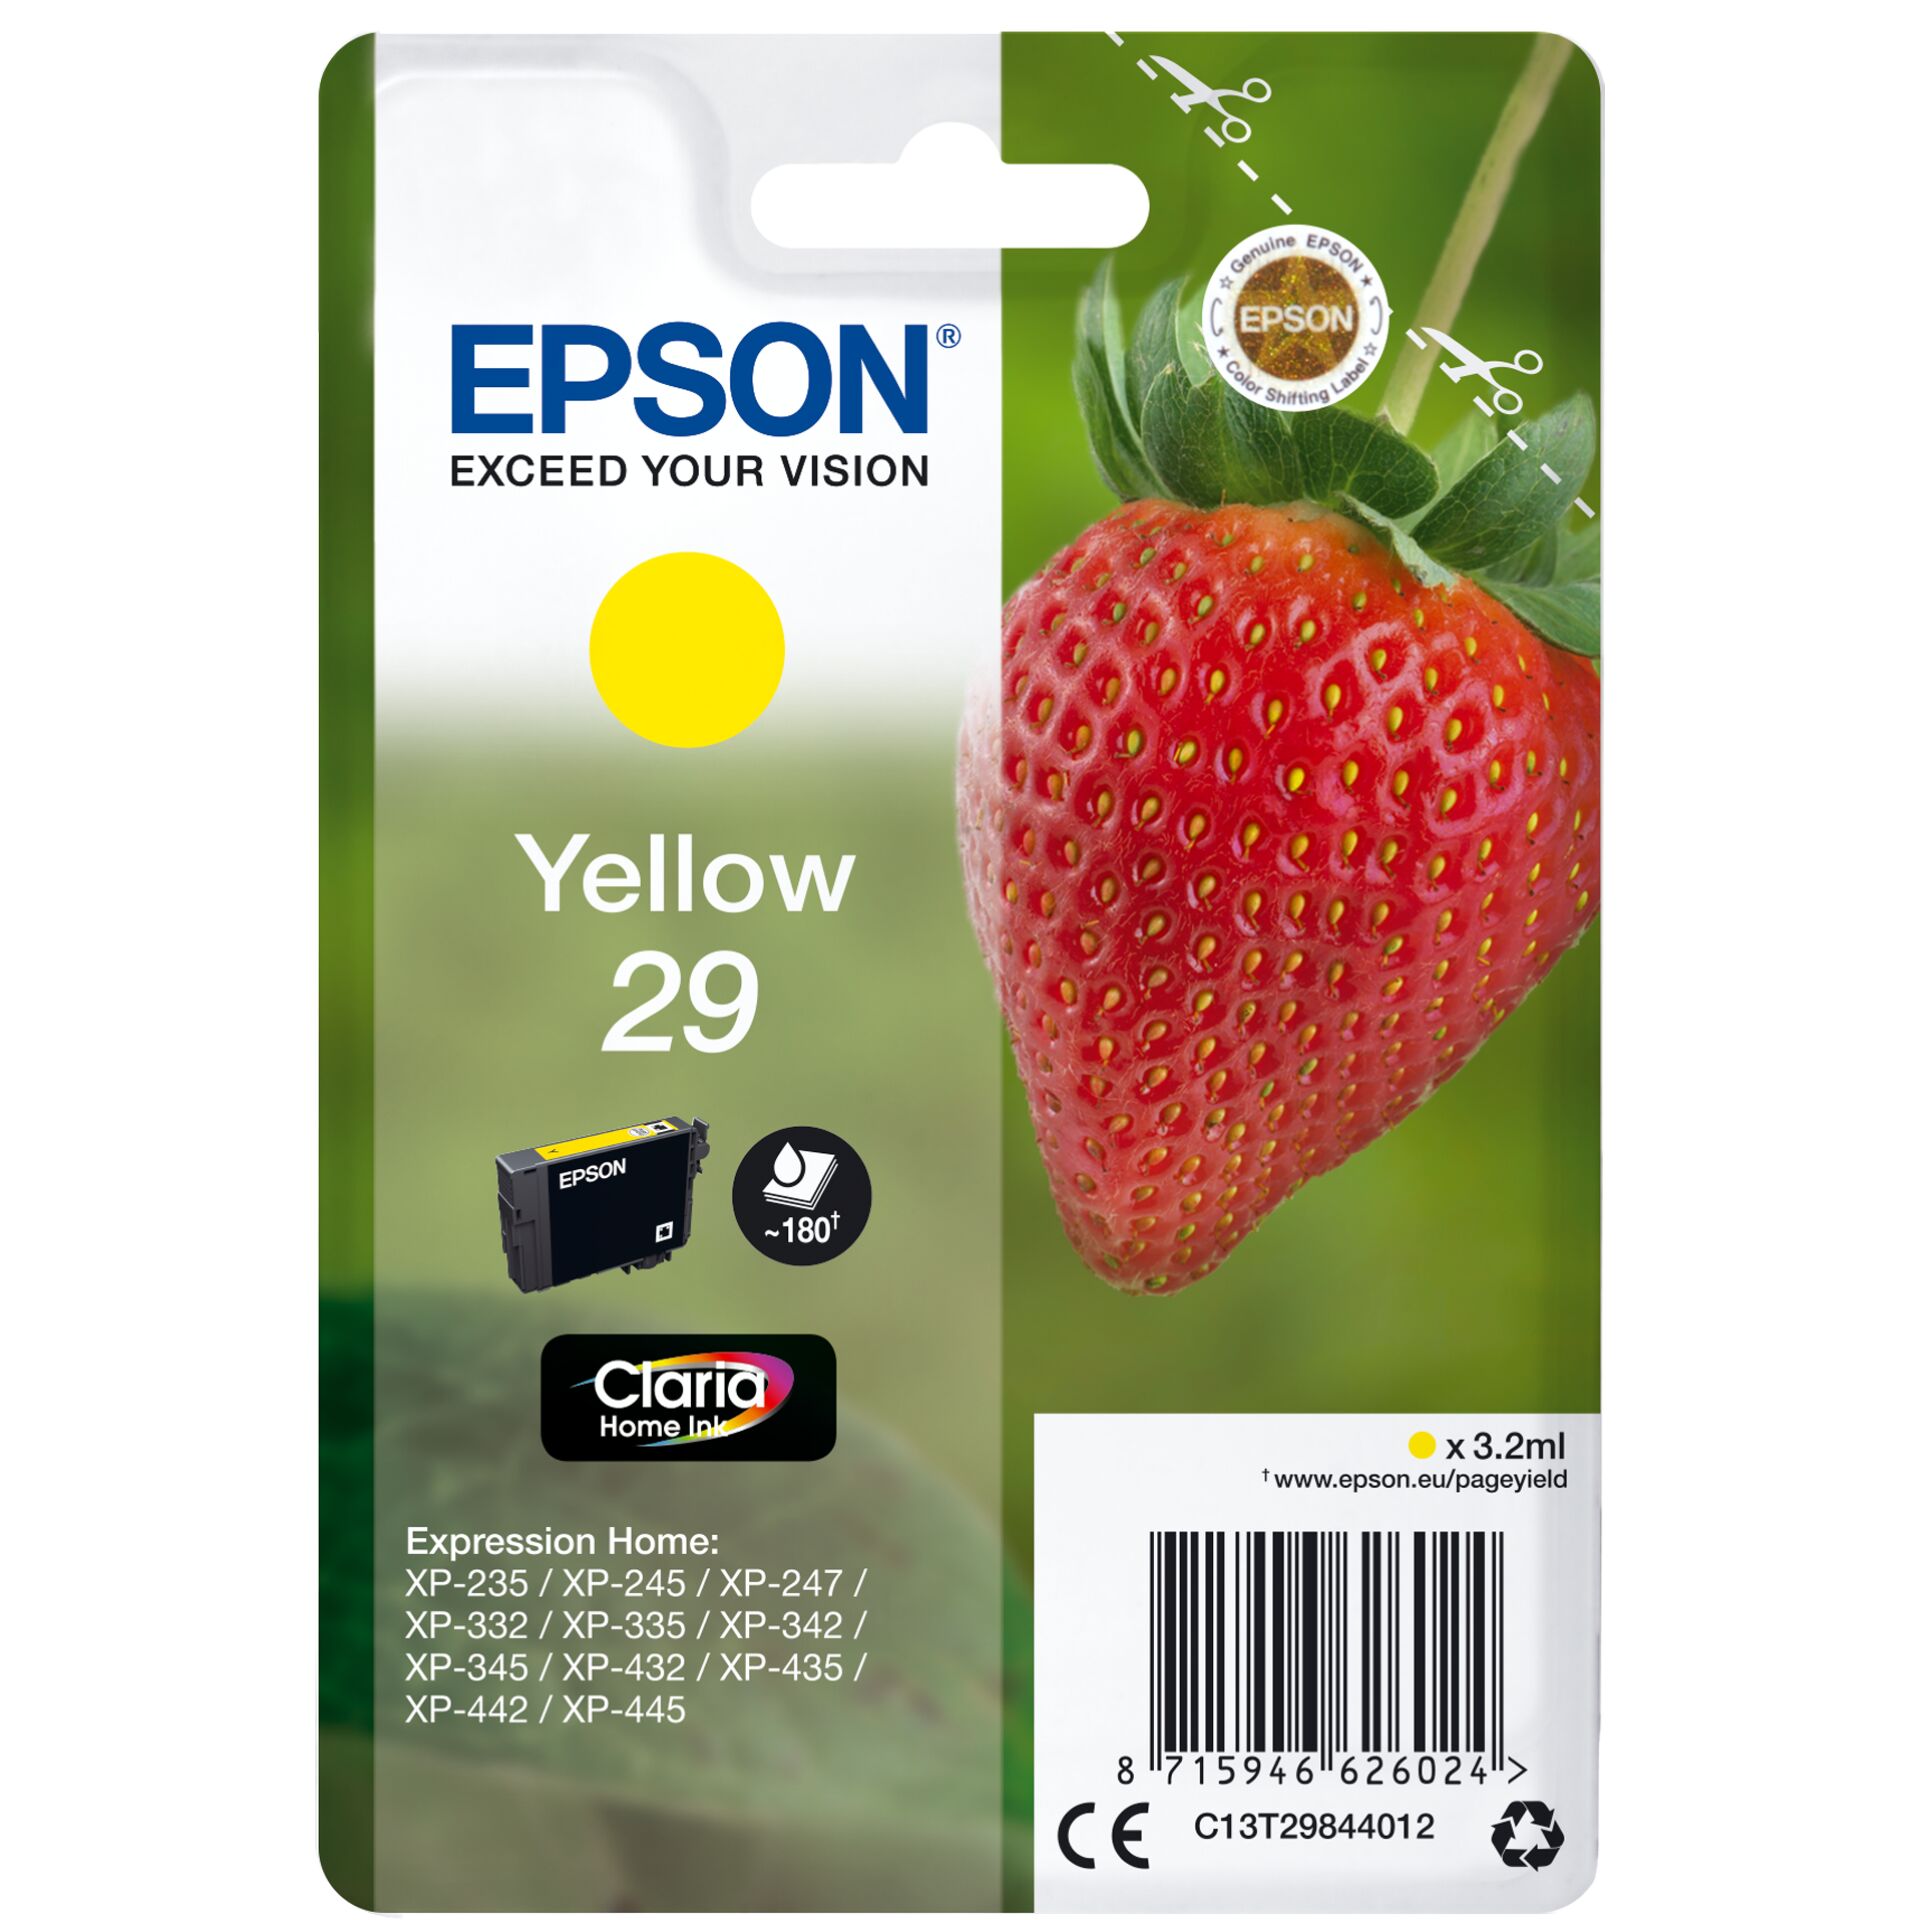 Epson Tinte 29 gelb, 3.2ml 